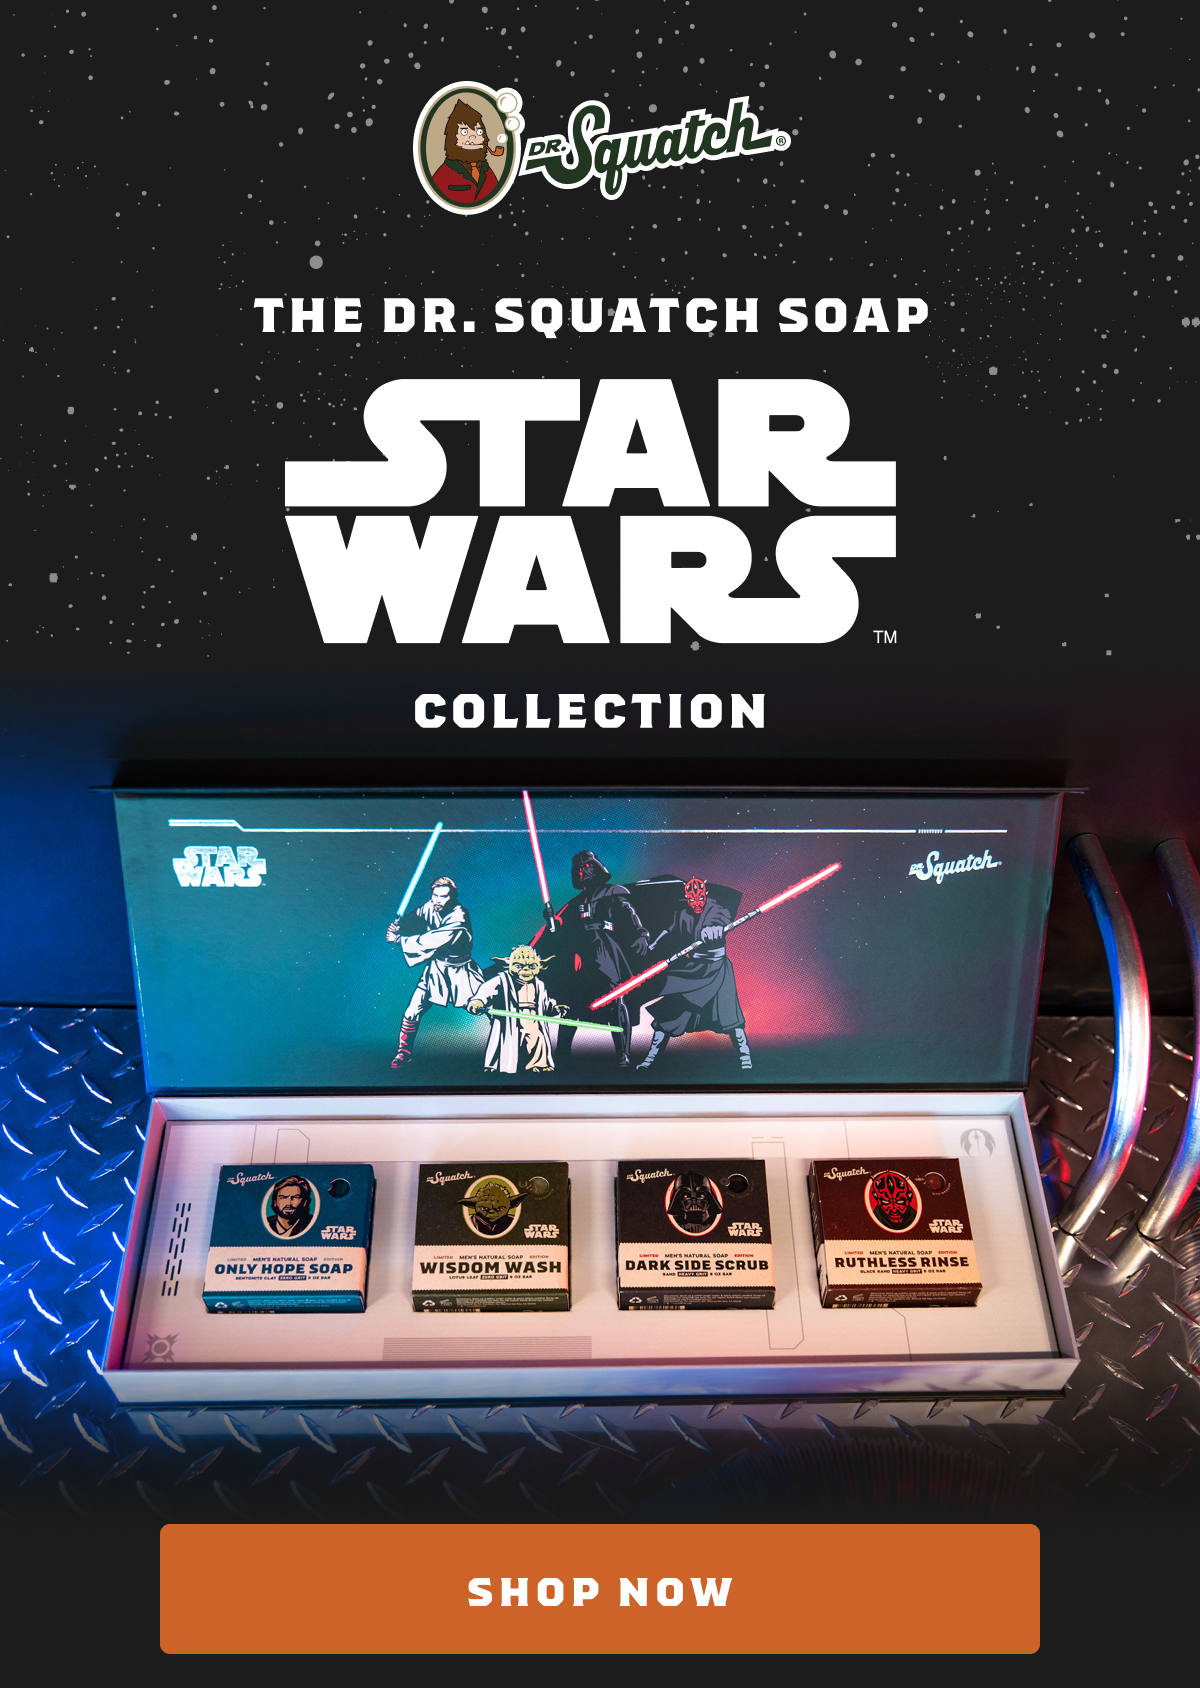 Merry Squatchmas! - Dr. Squatch Soap Co